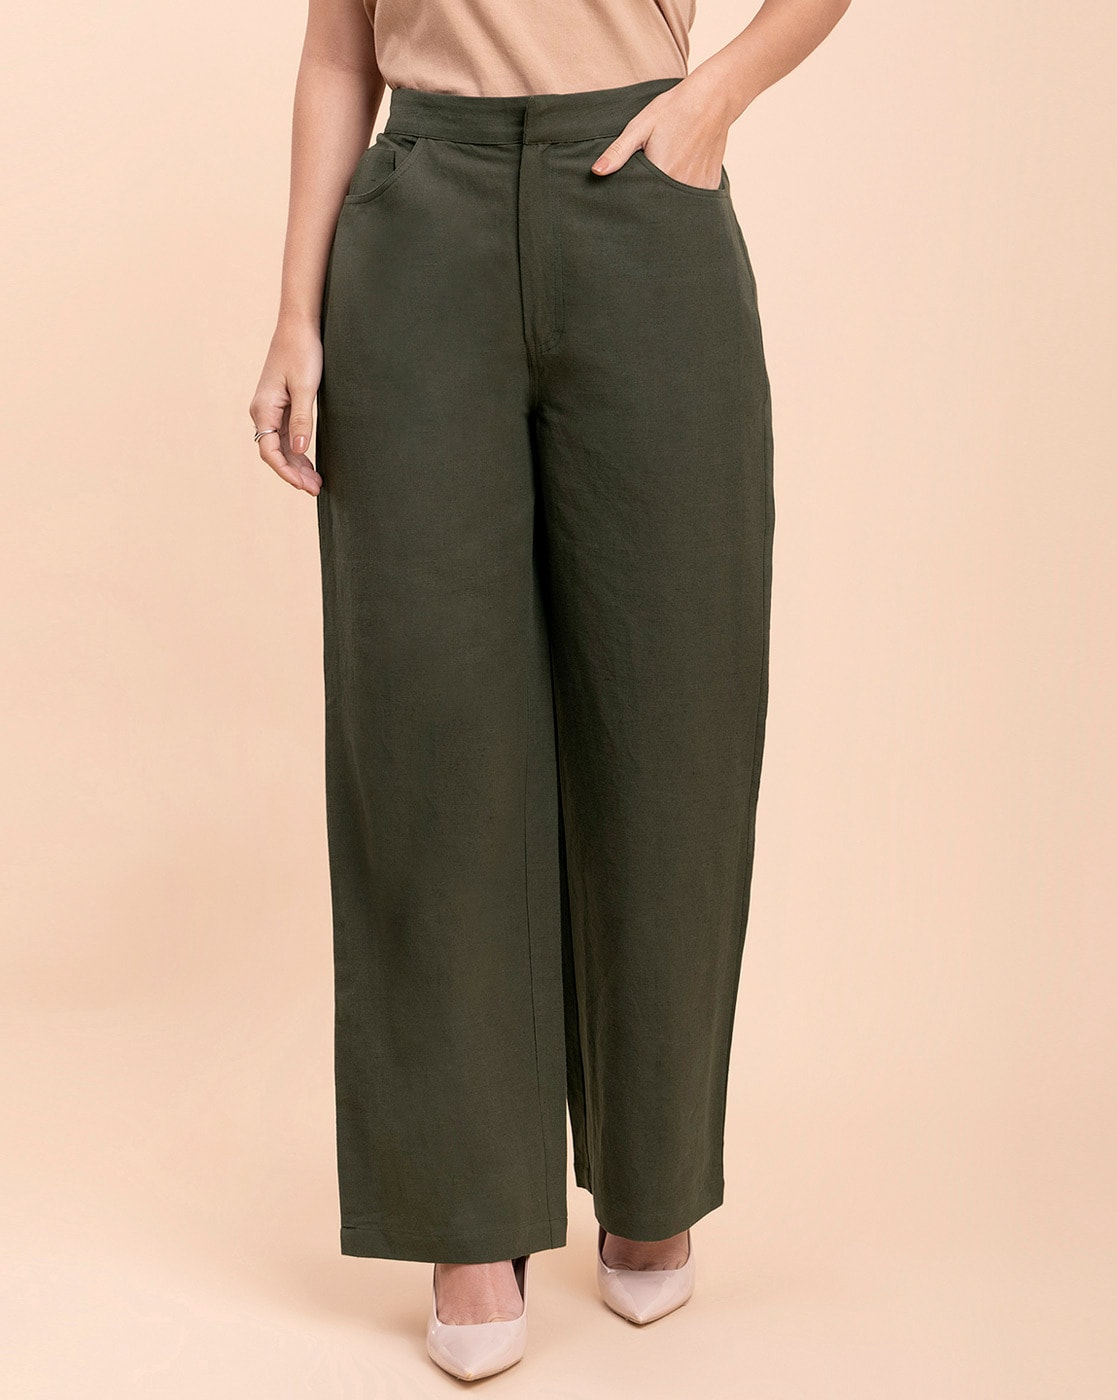  AJIUHE Women's Summer Linen Pants Casual Loose